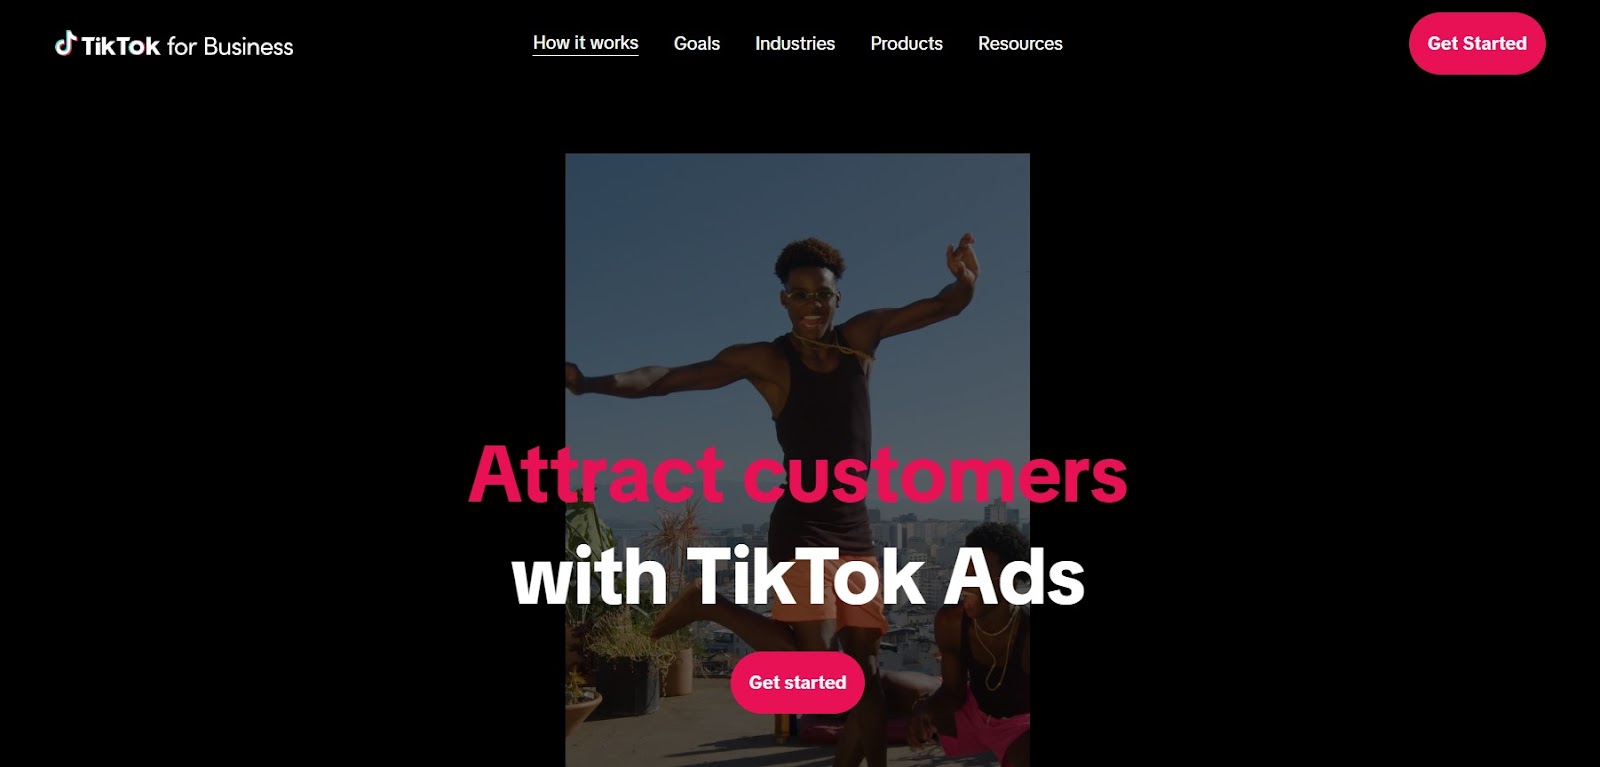 TikTok has grown into a huge social media platform